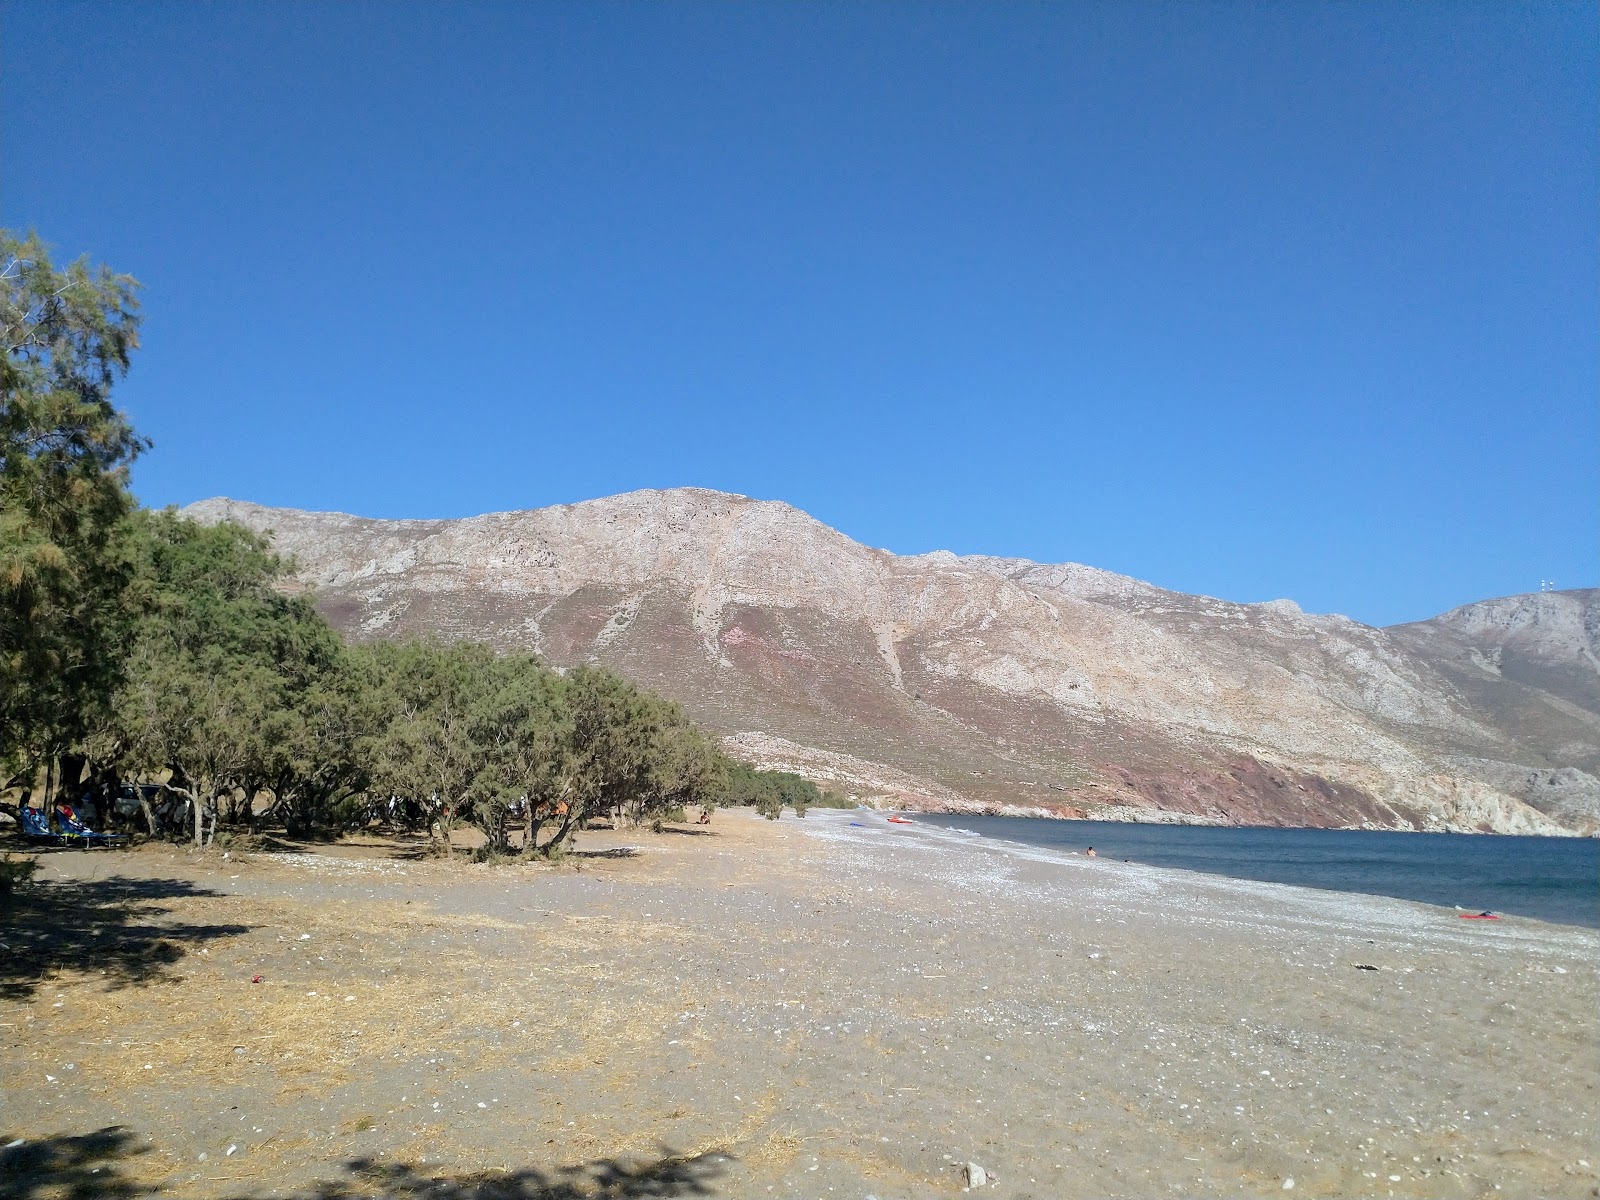 Fotografija Eristos beach nahaja se v naravnem okolju